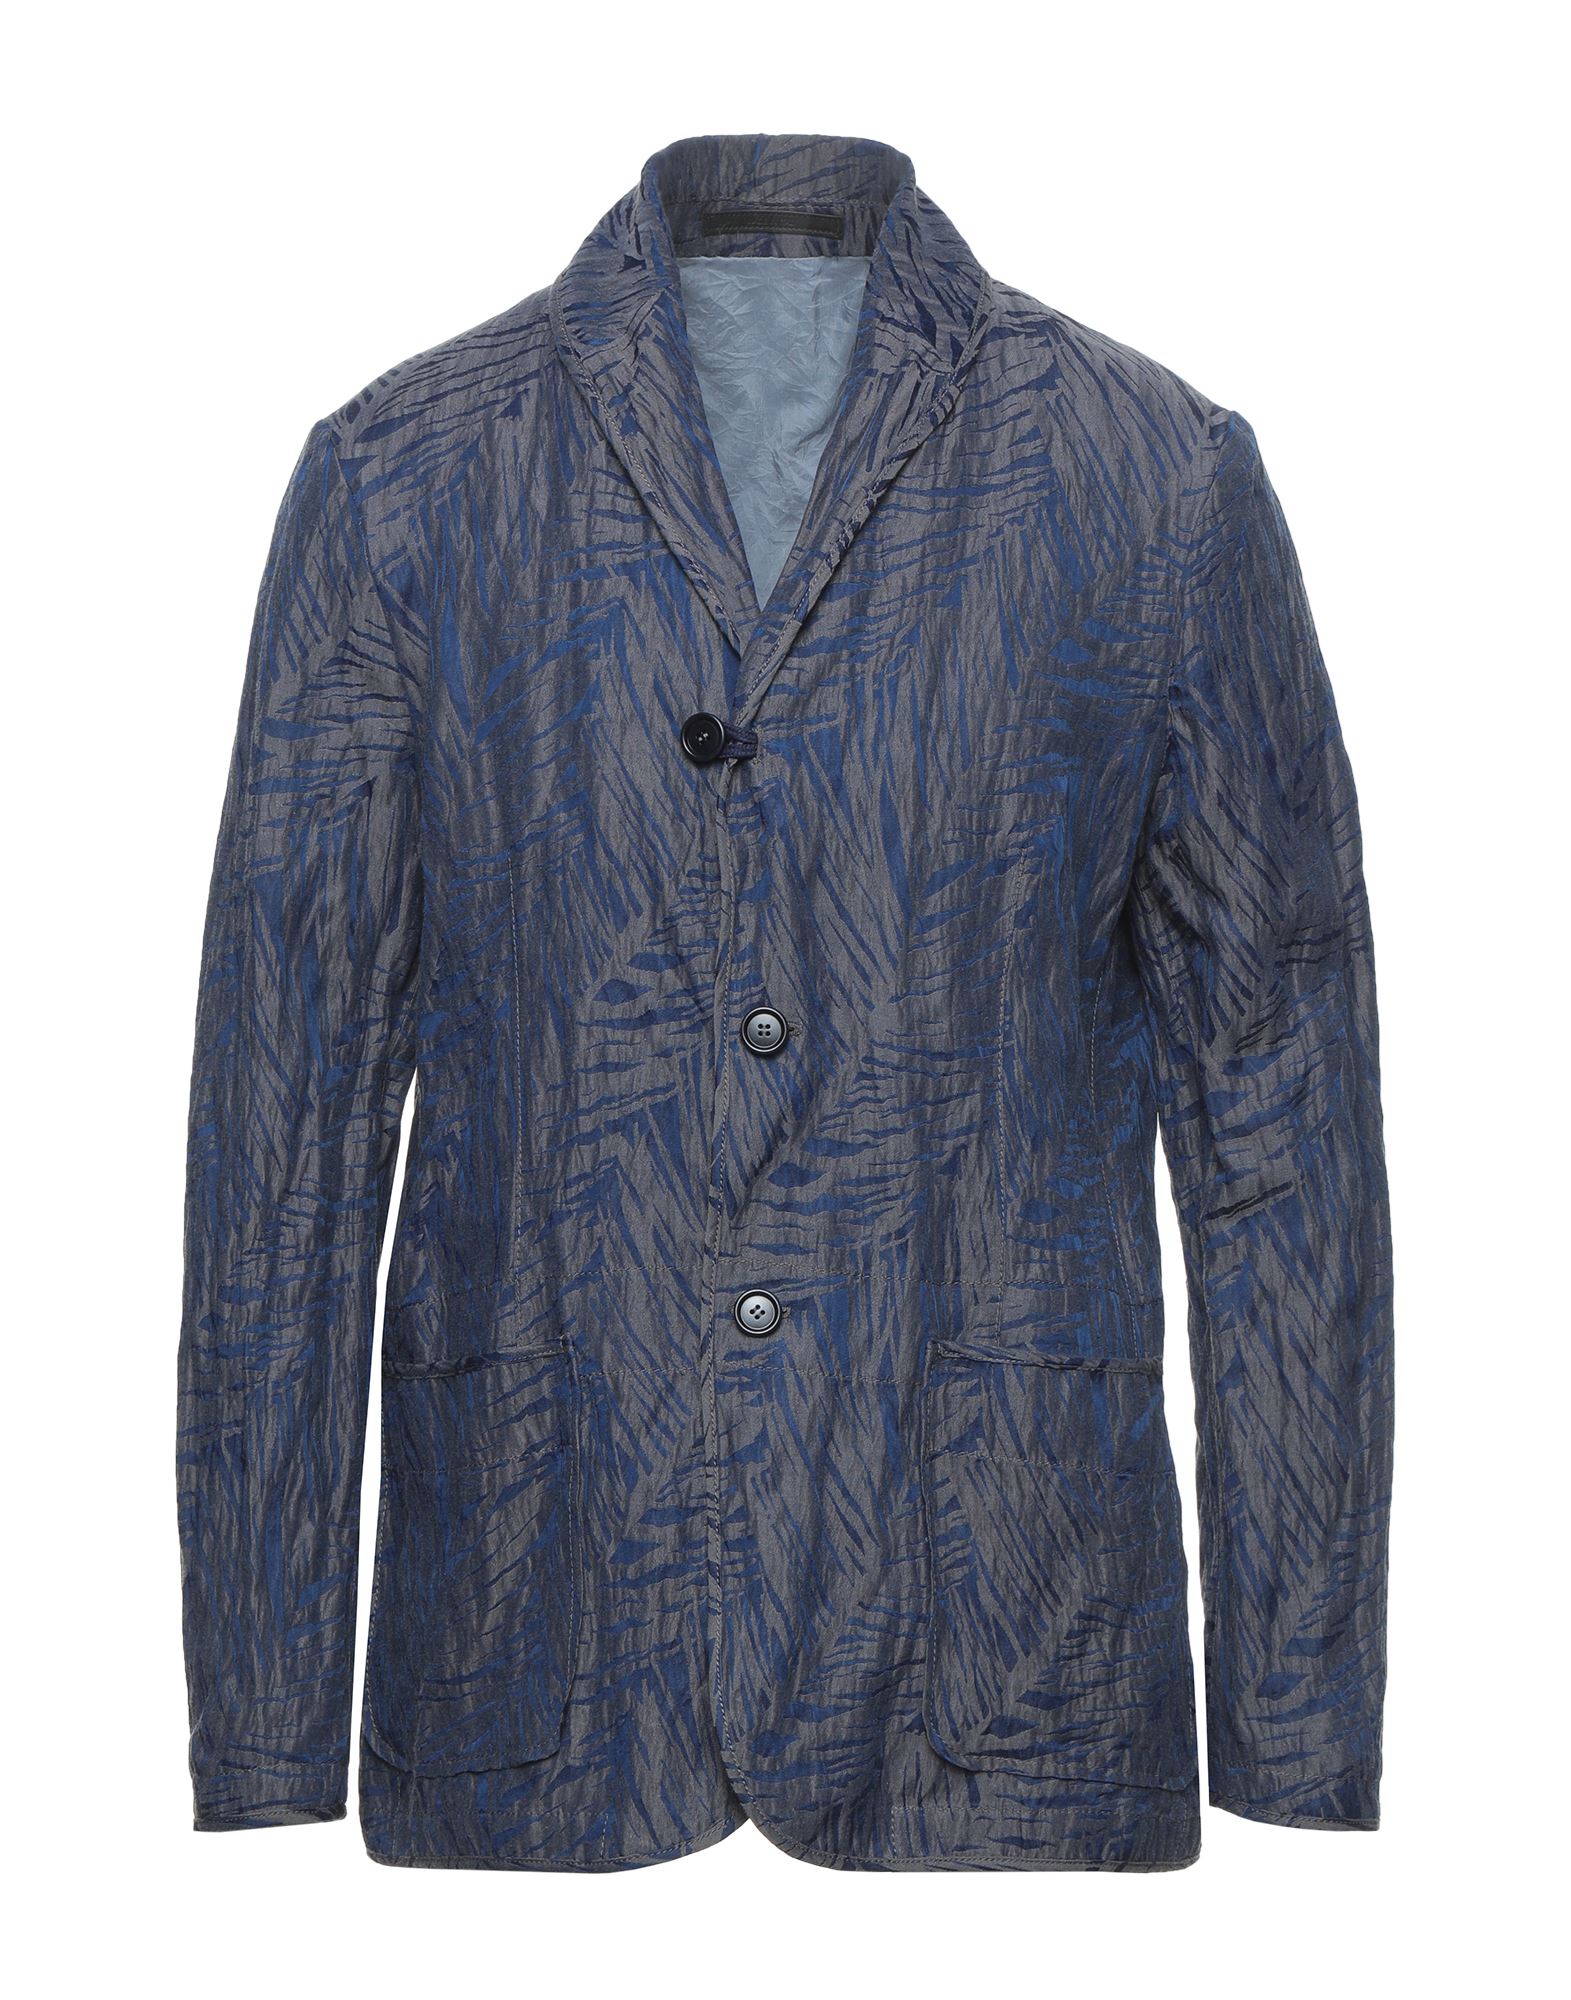 Giorgio Armani Suit Jackets In Grey